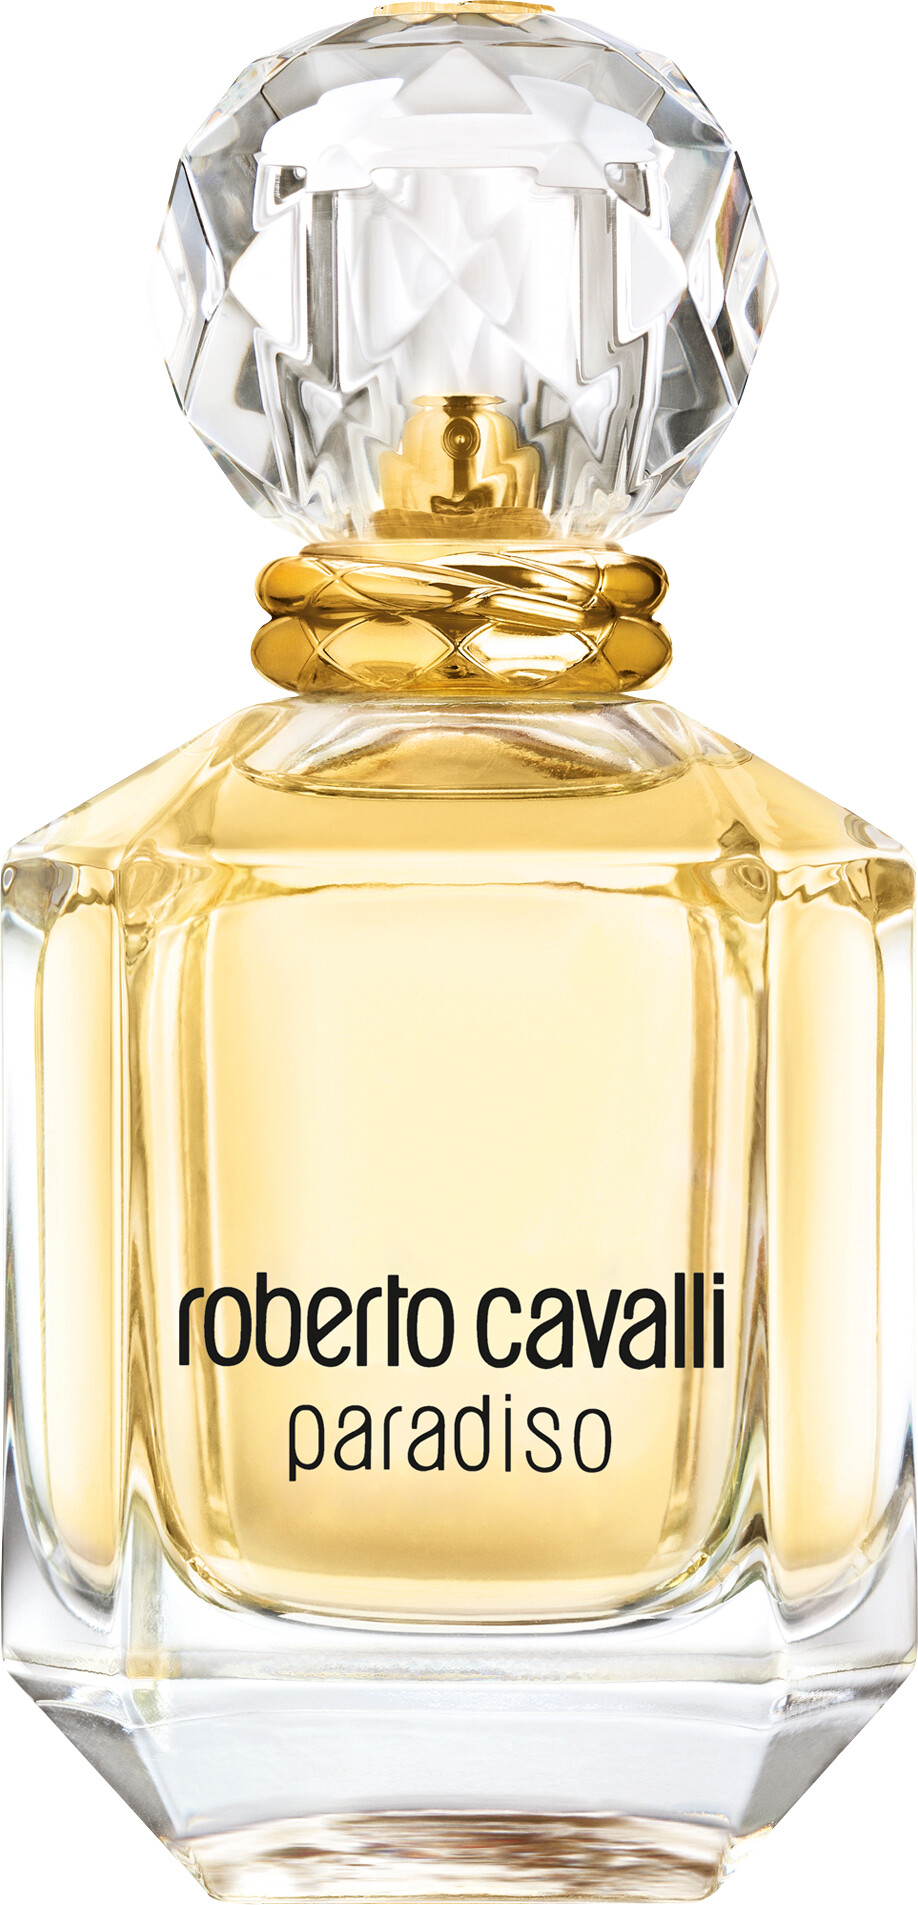 Roberto Cavalli Paradiso Eau de Parfum